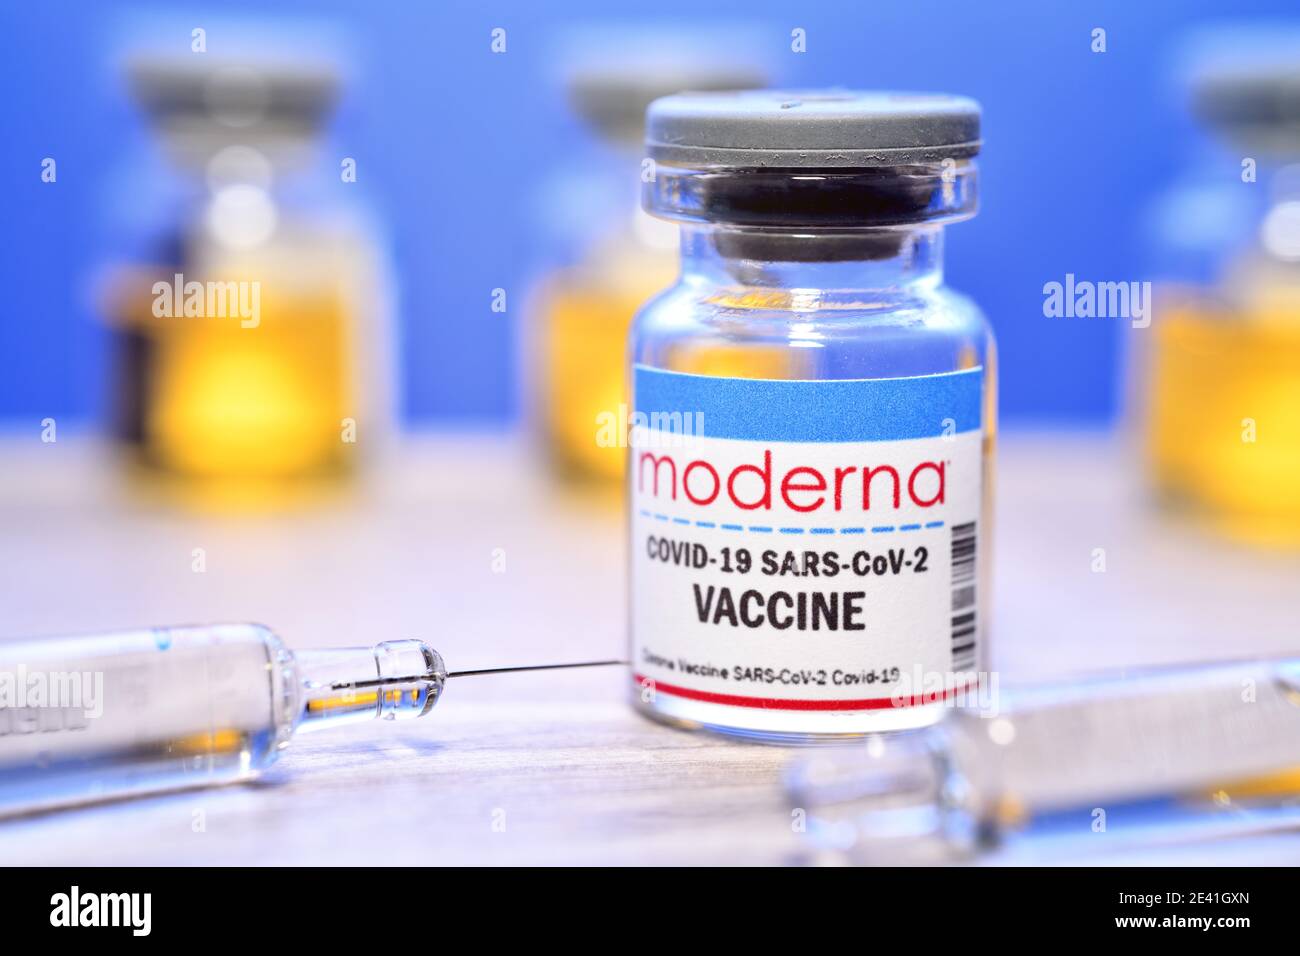 Moderna Covid Vaccine, Symbolic Image Stock Photo